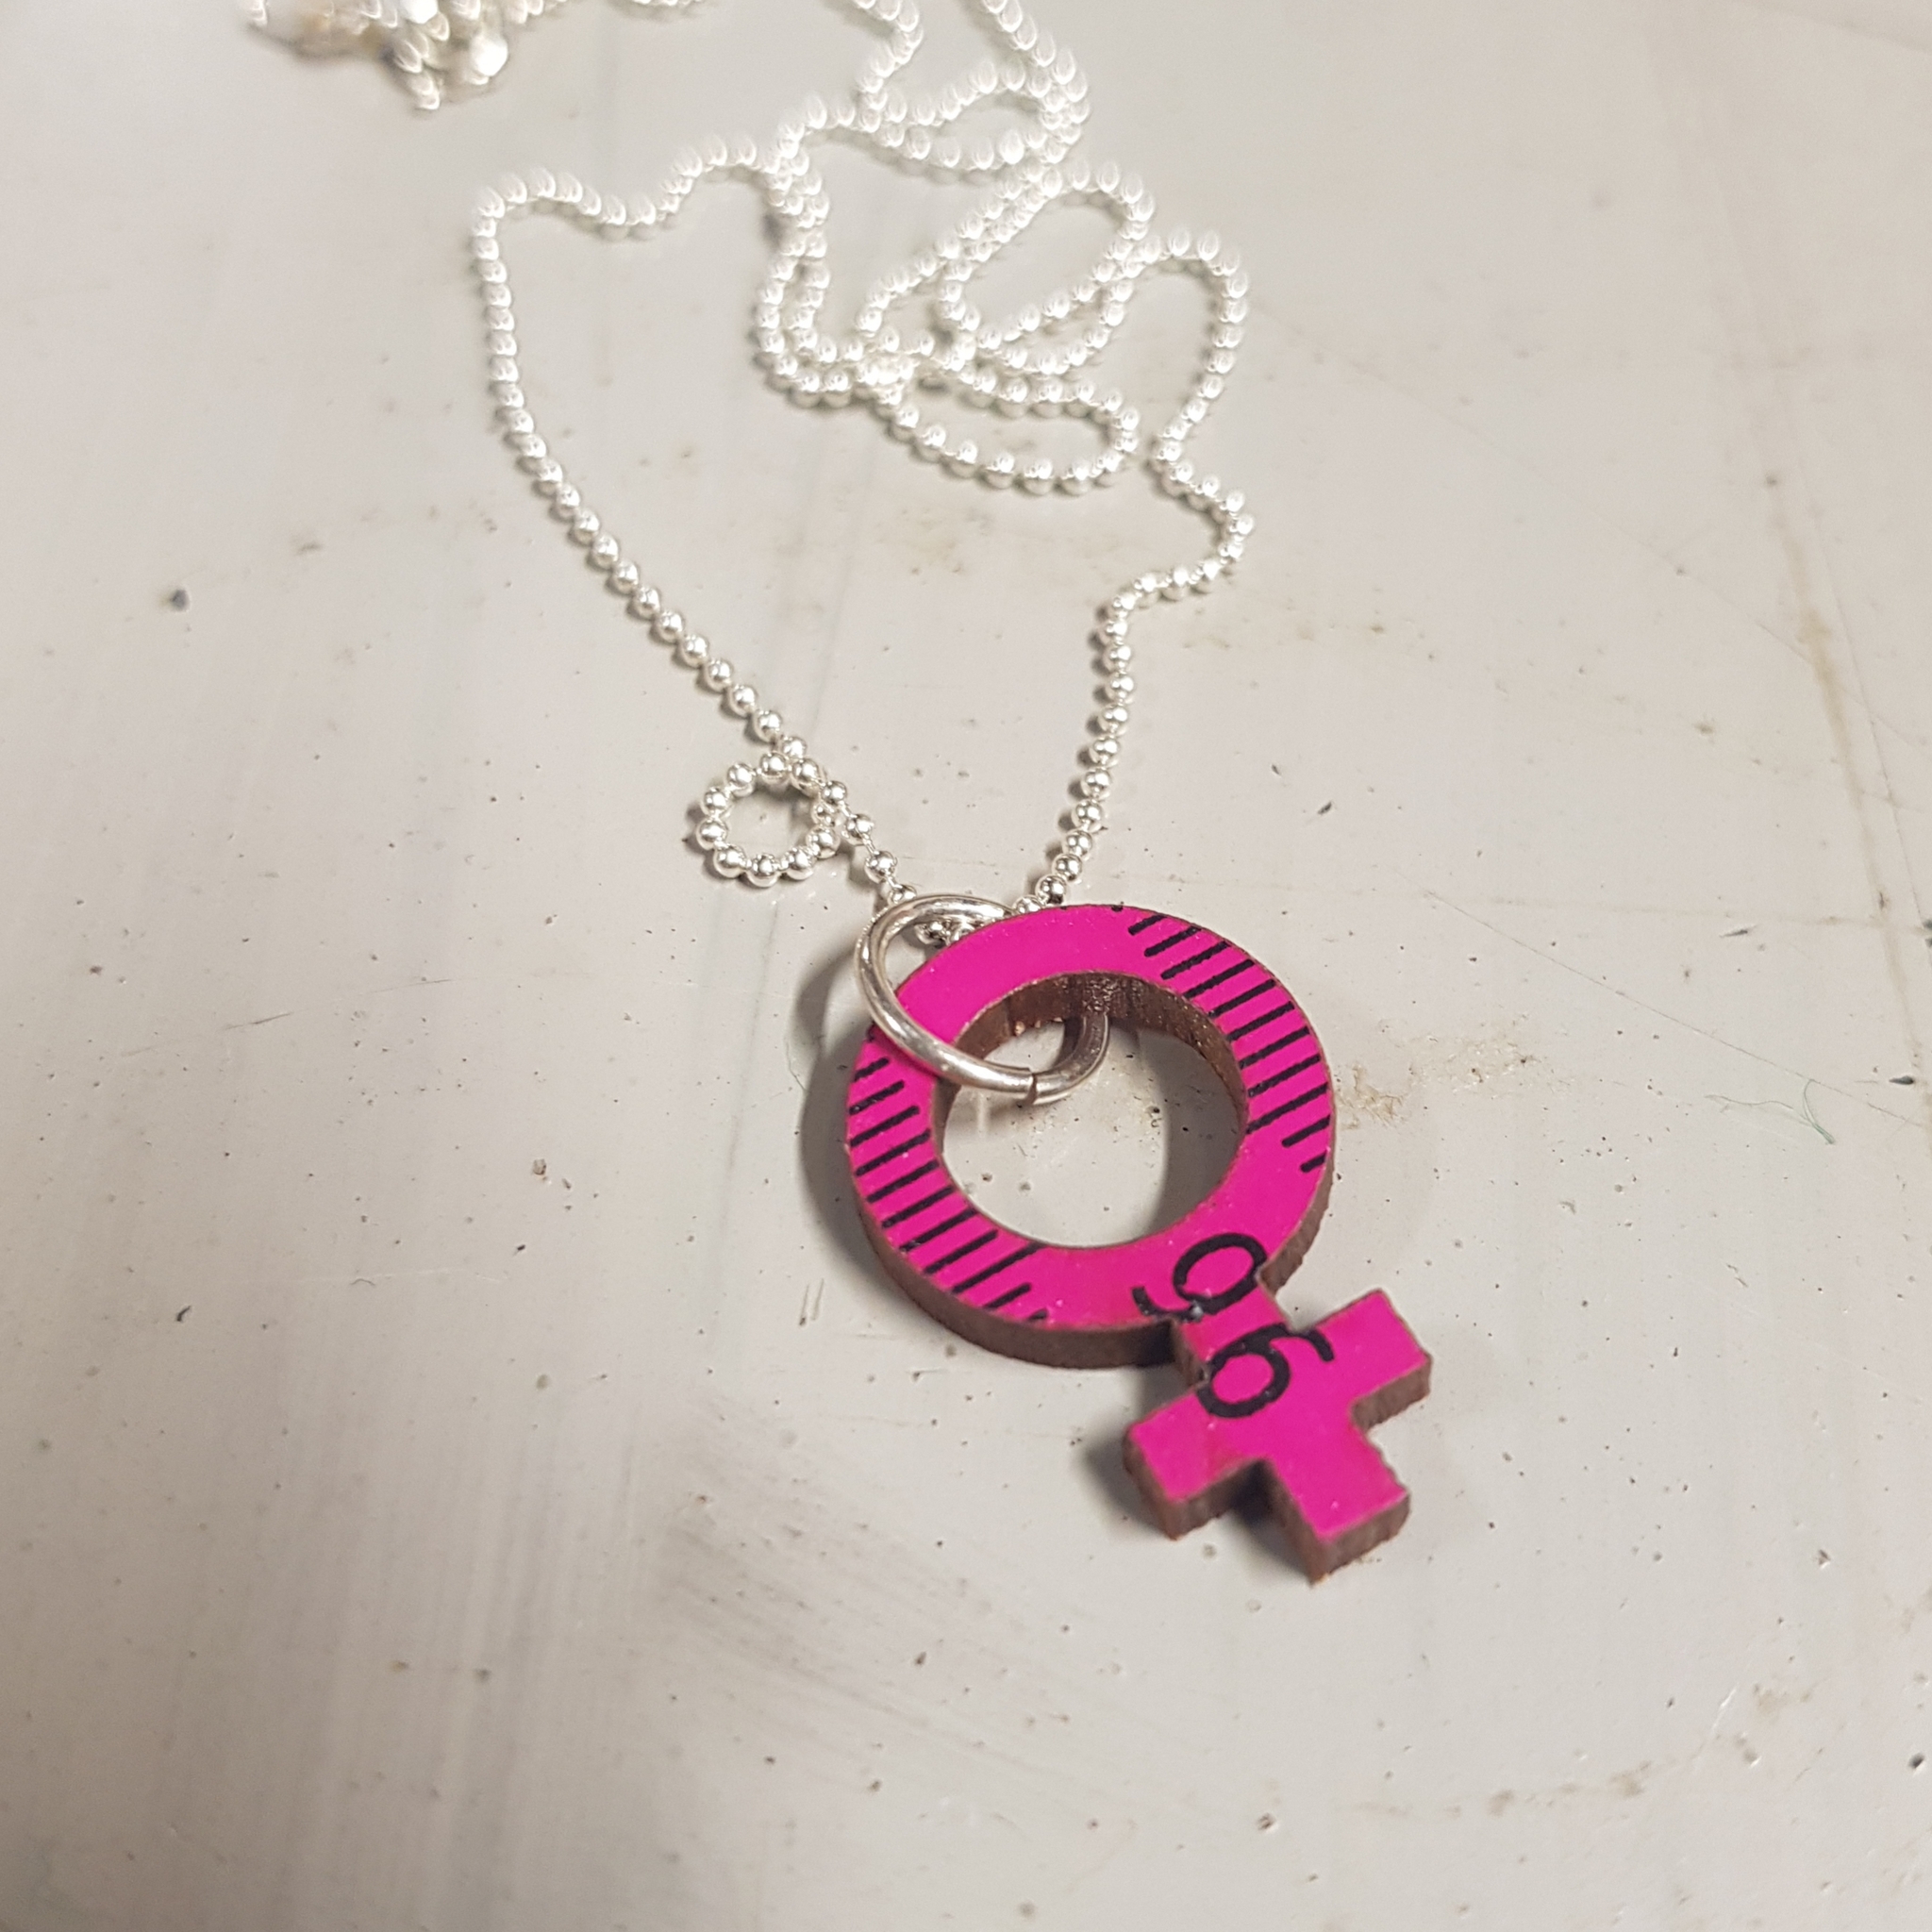 Necklace Feminist big Pink